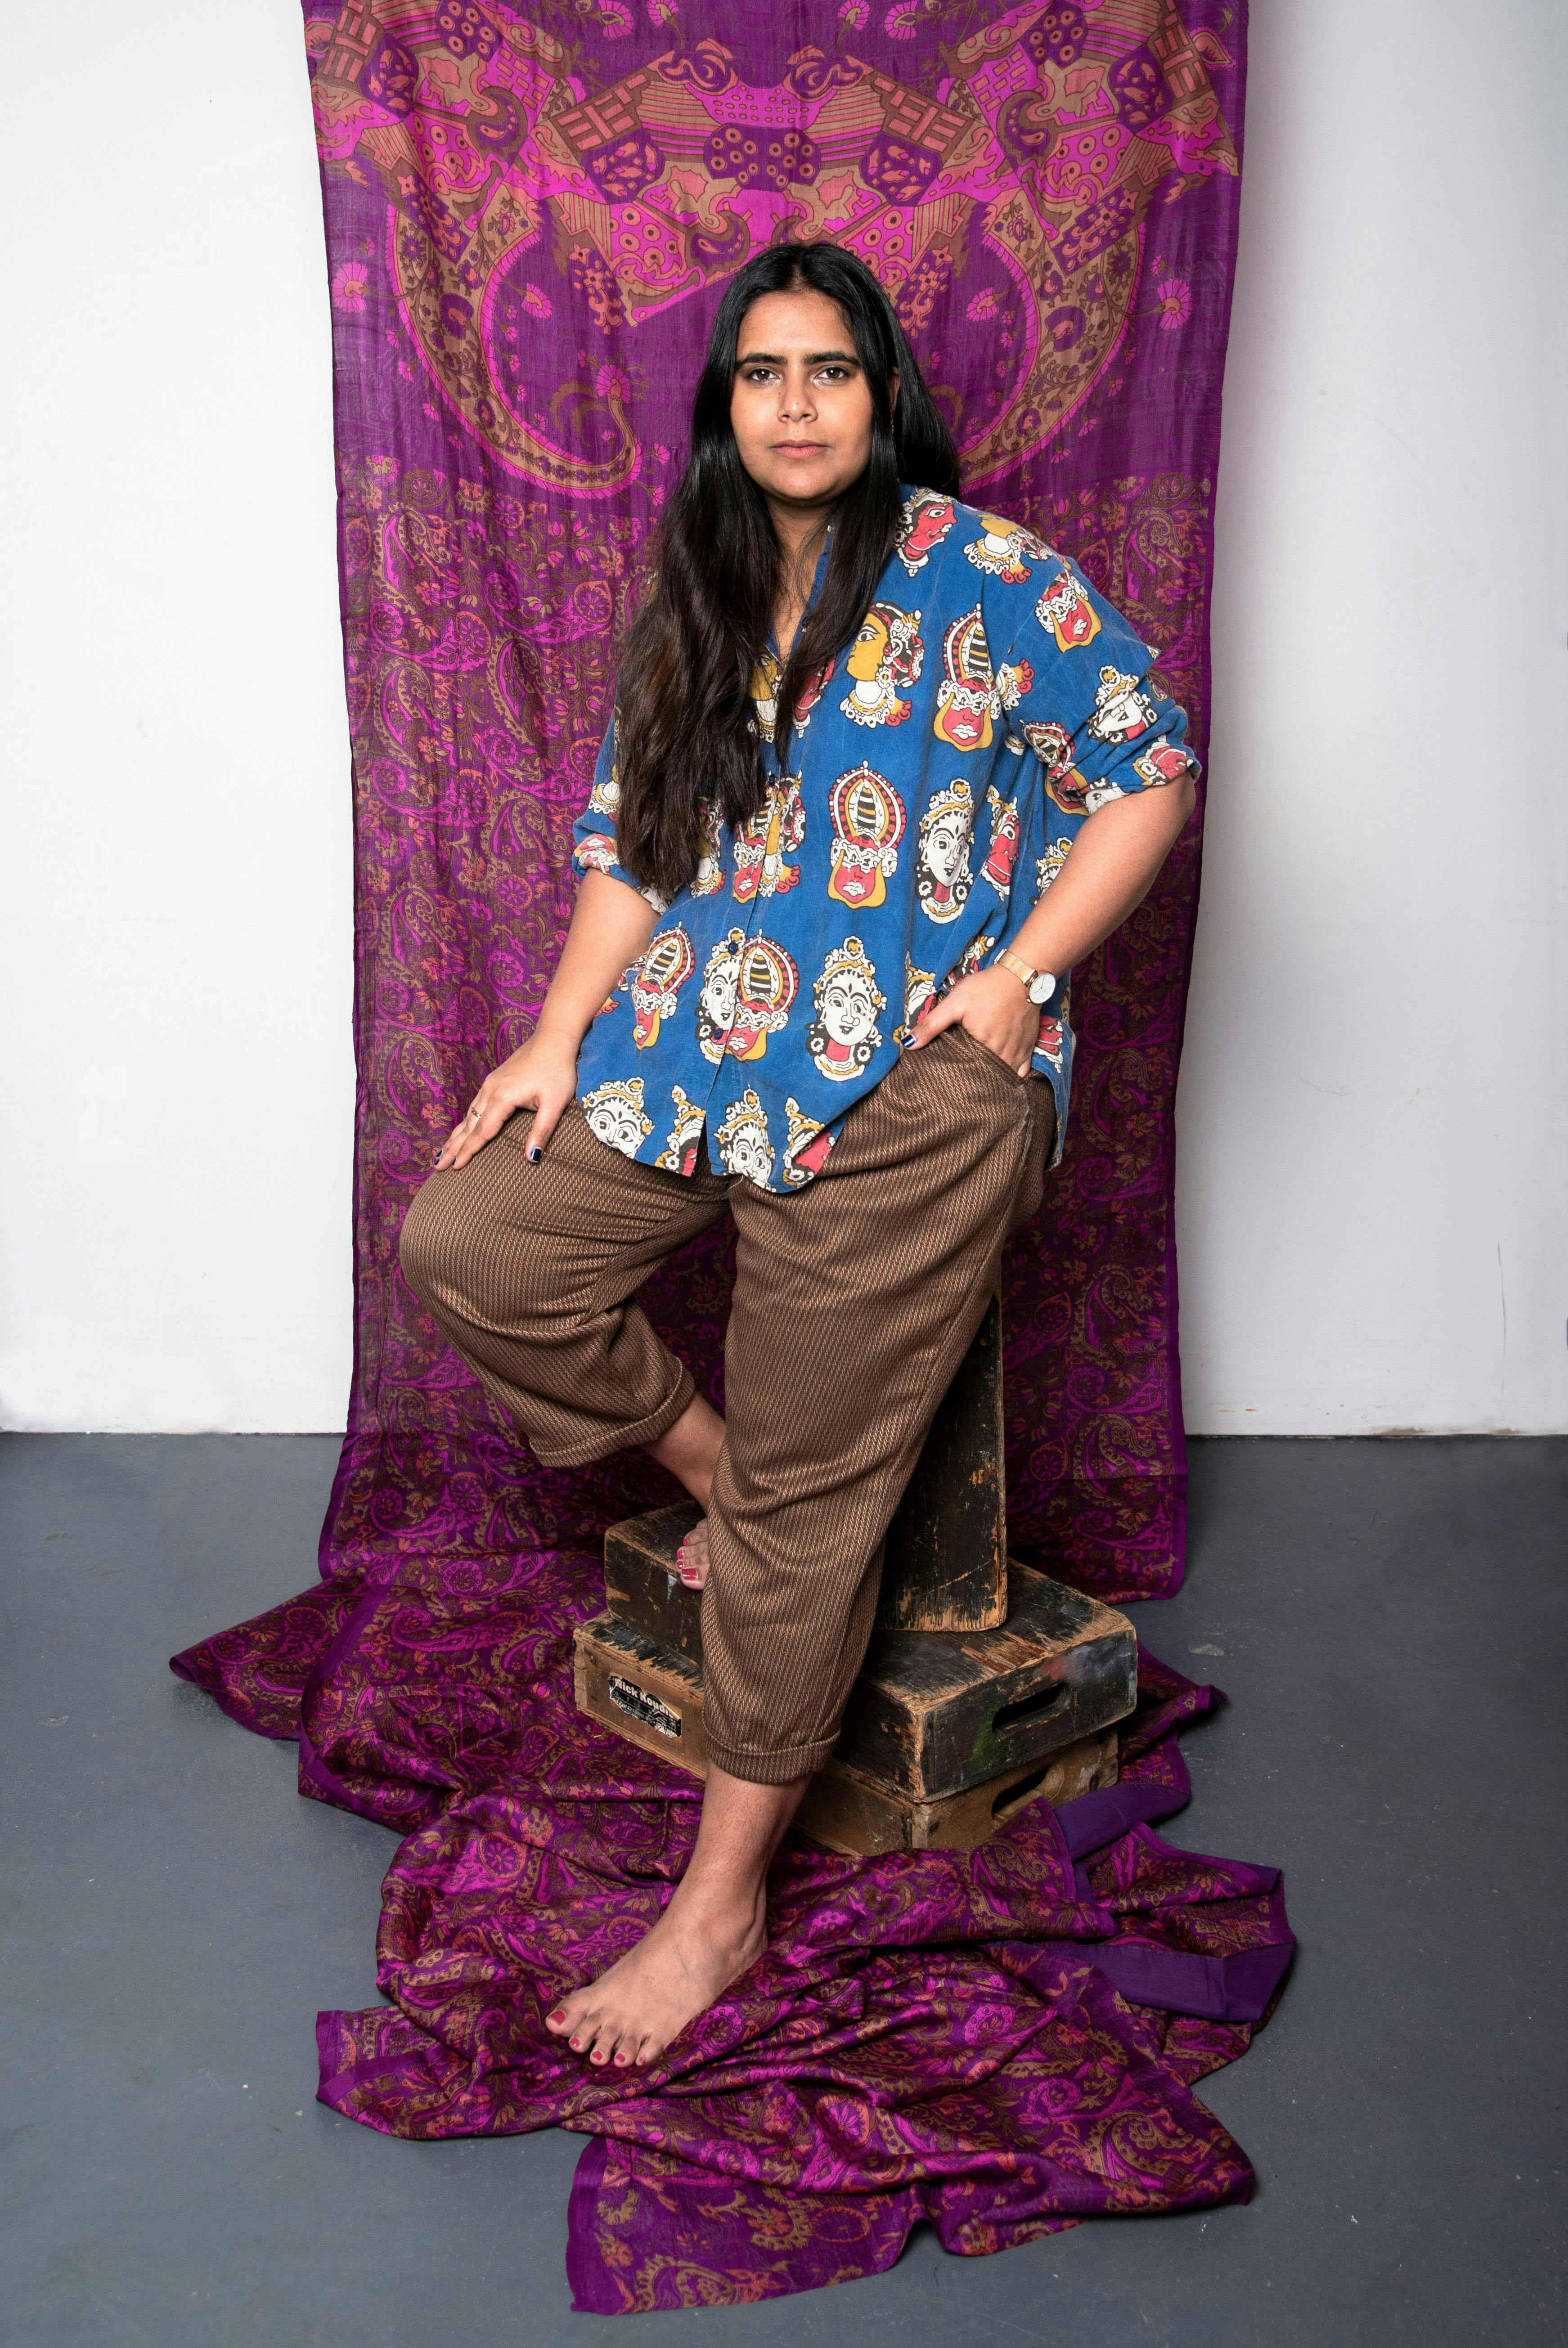 Photo of the artist Spandita Malik posing with hanging fabric